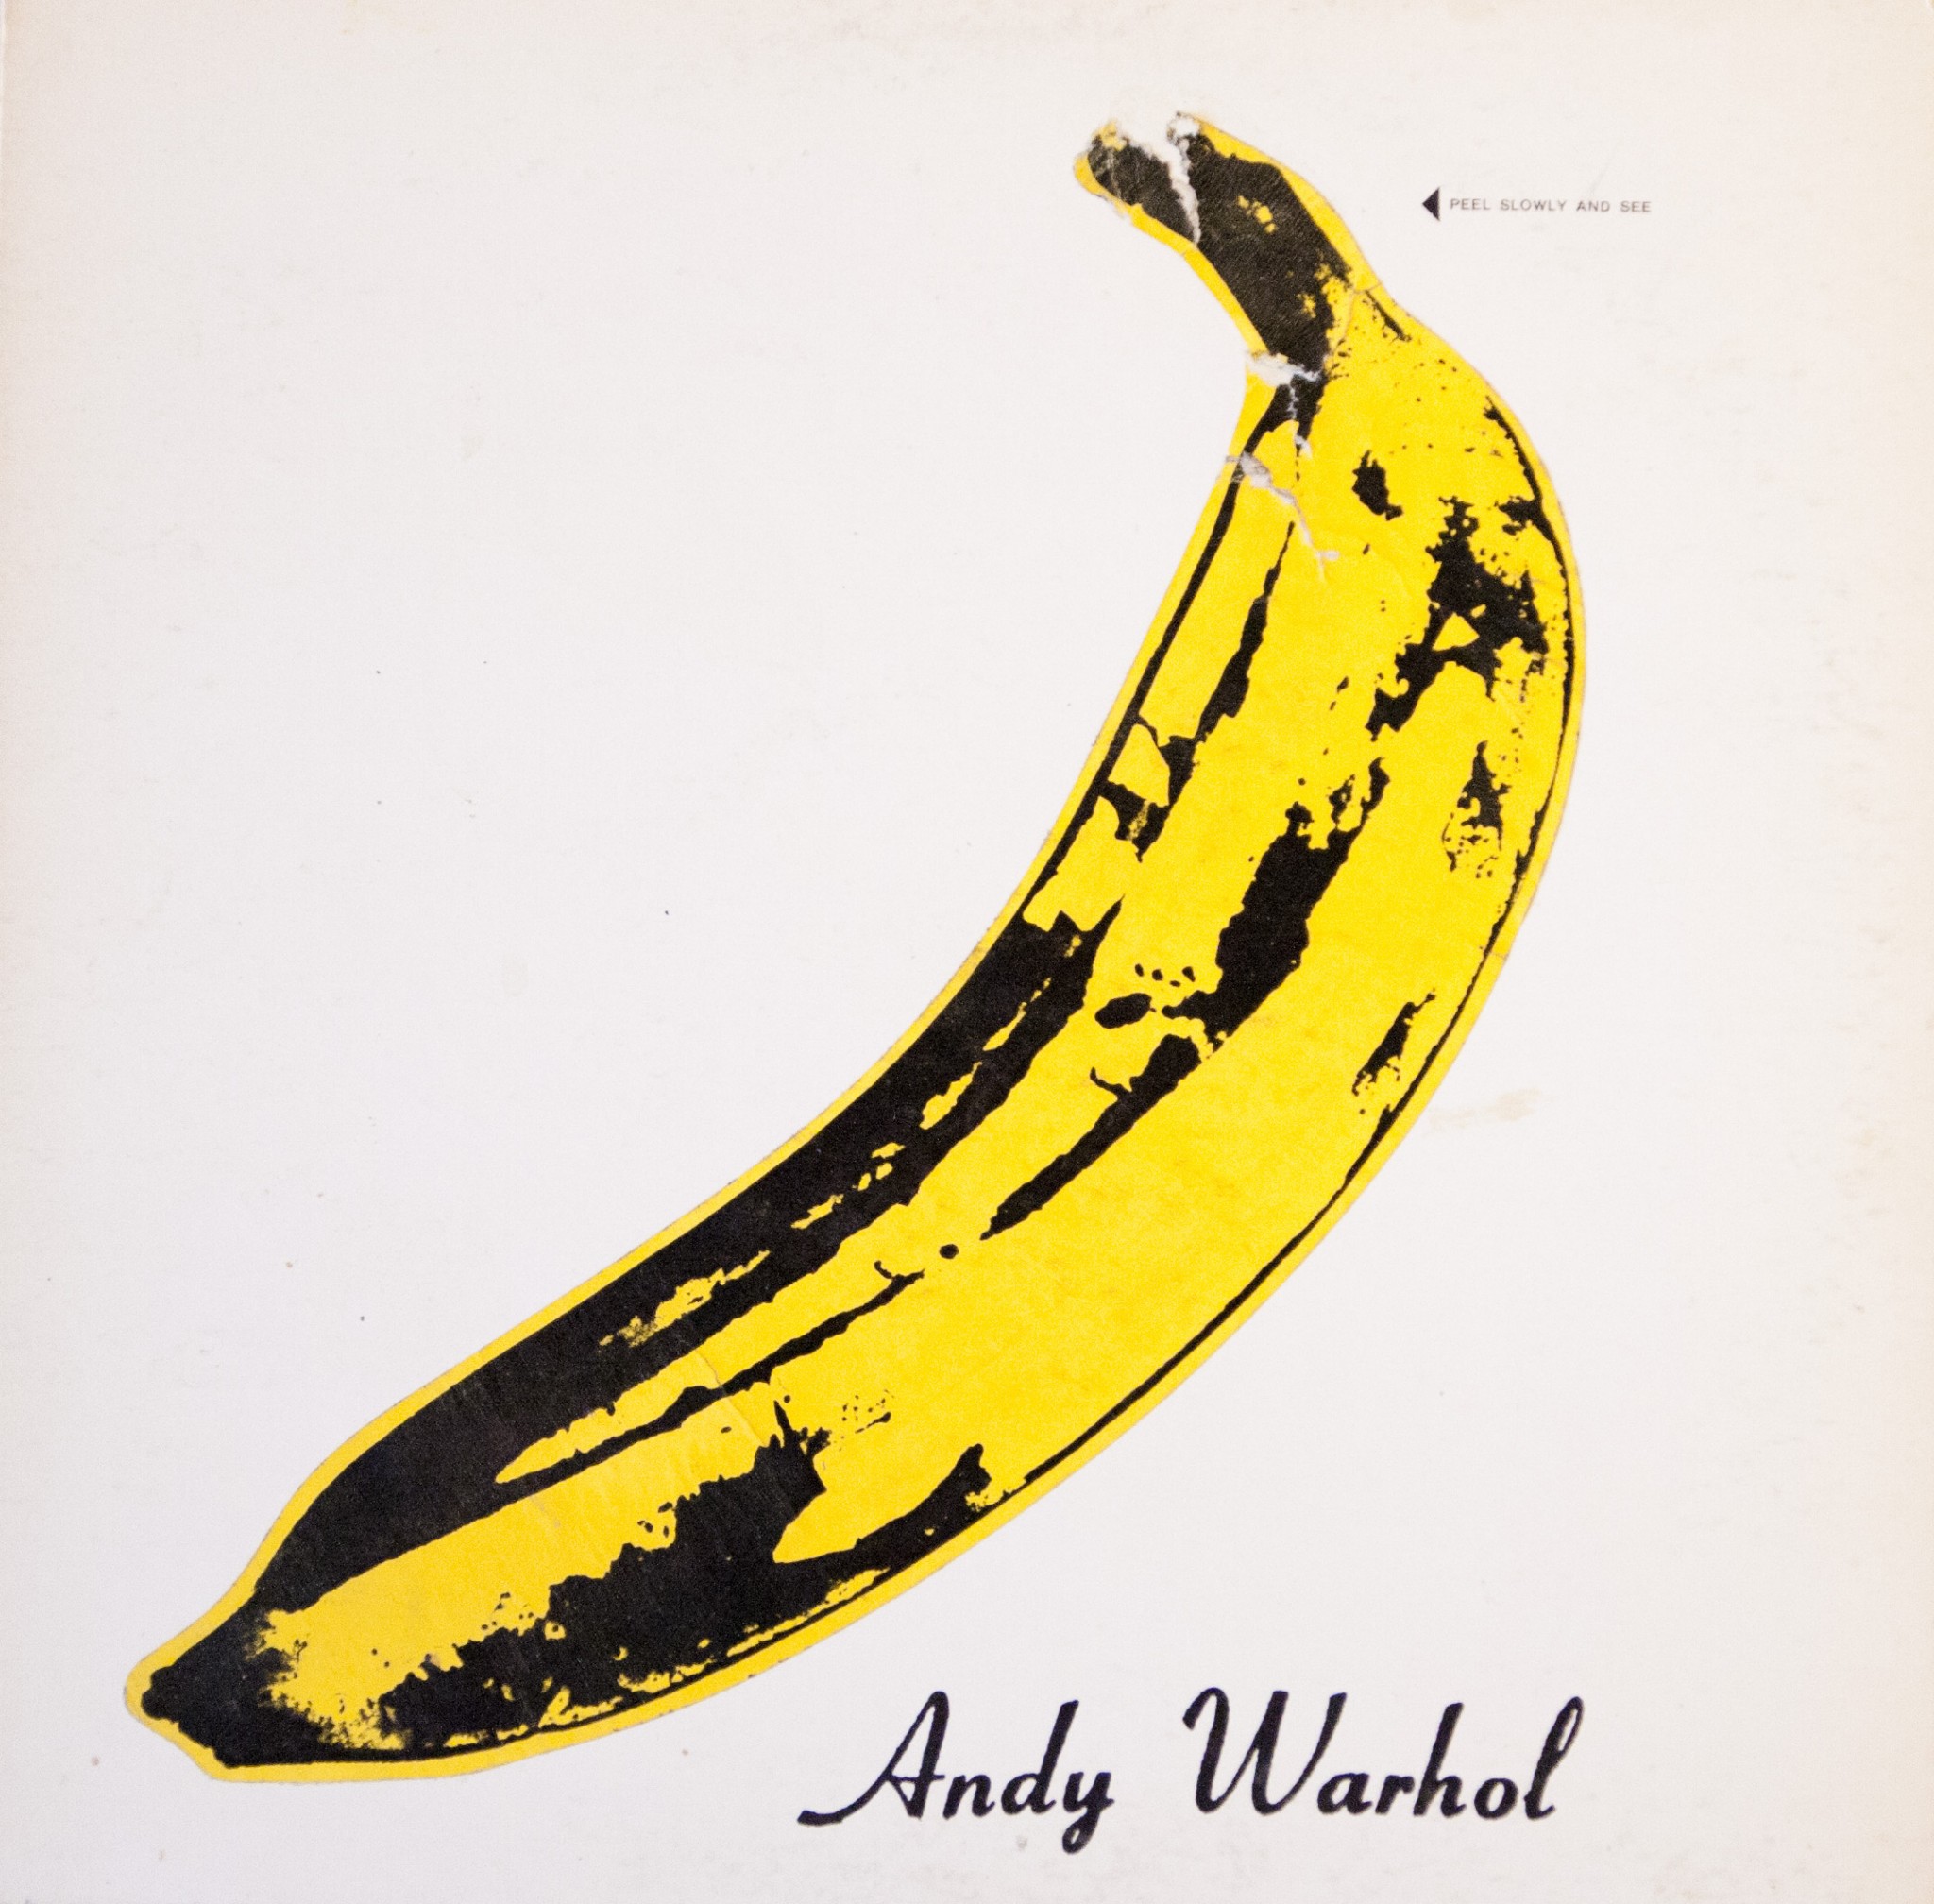 Andrew Warhol